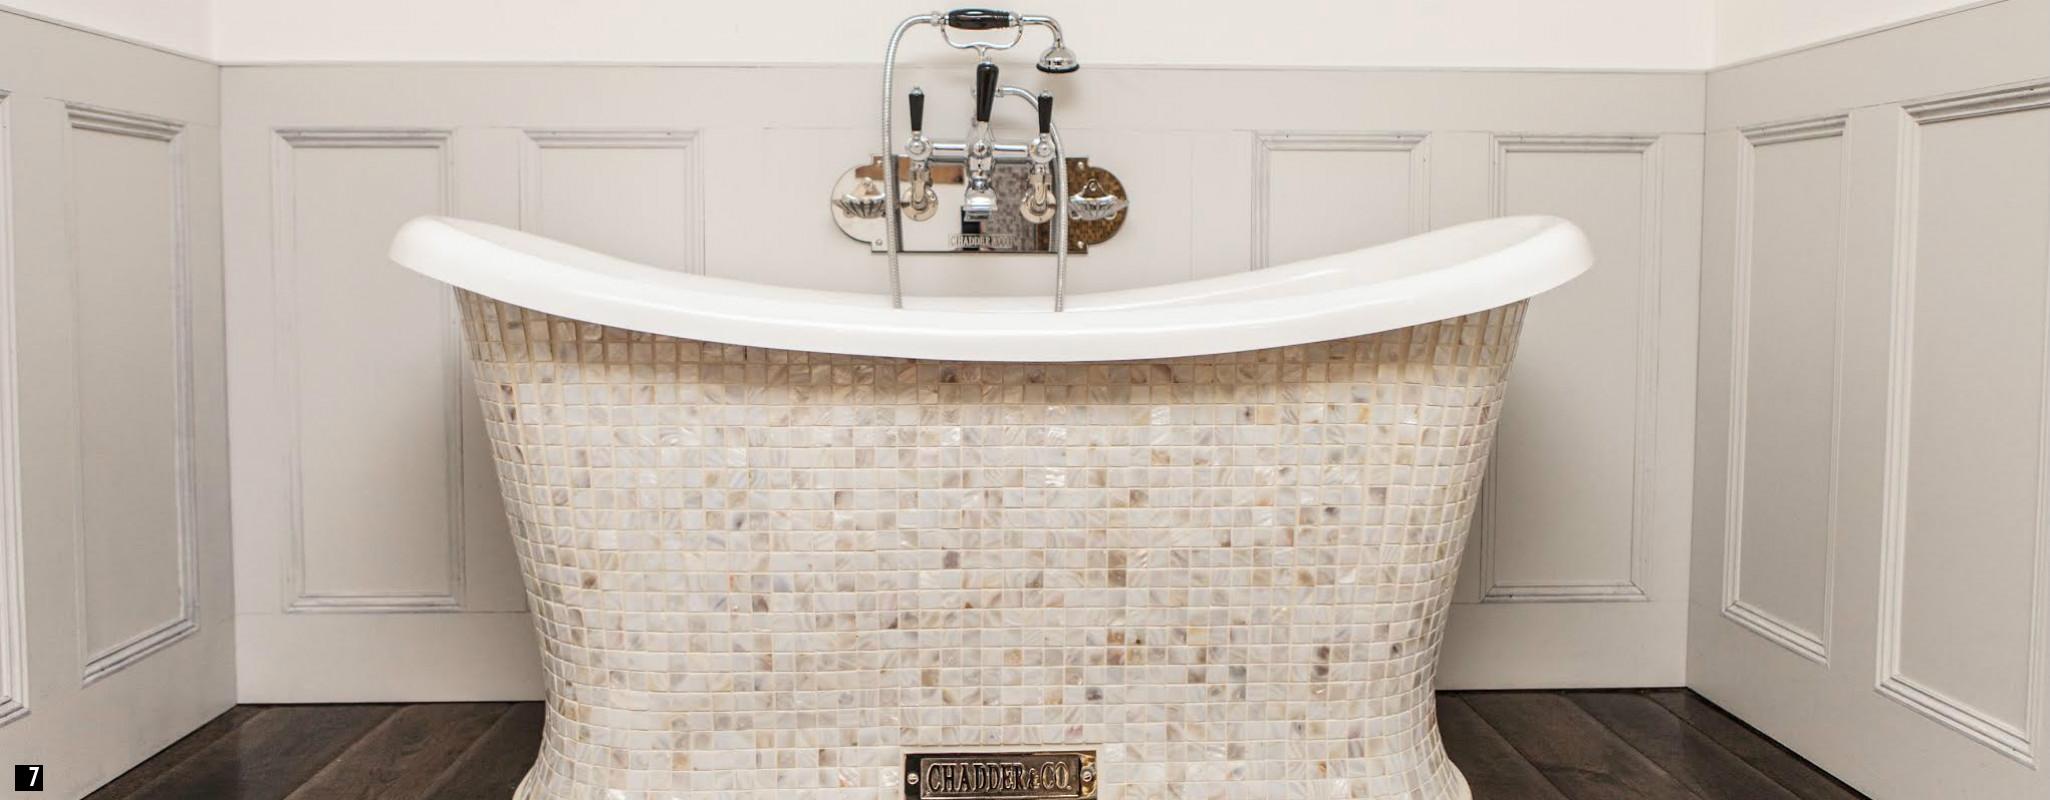 Mosaic Baths, Mosaic Bath , Vintage Nickel Taps and Fittings, Mosaic Roll Top Bath 